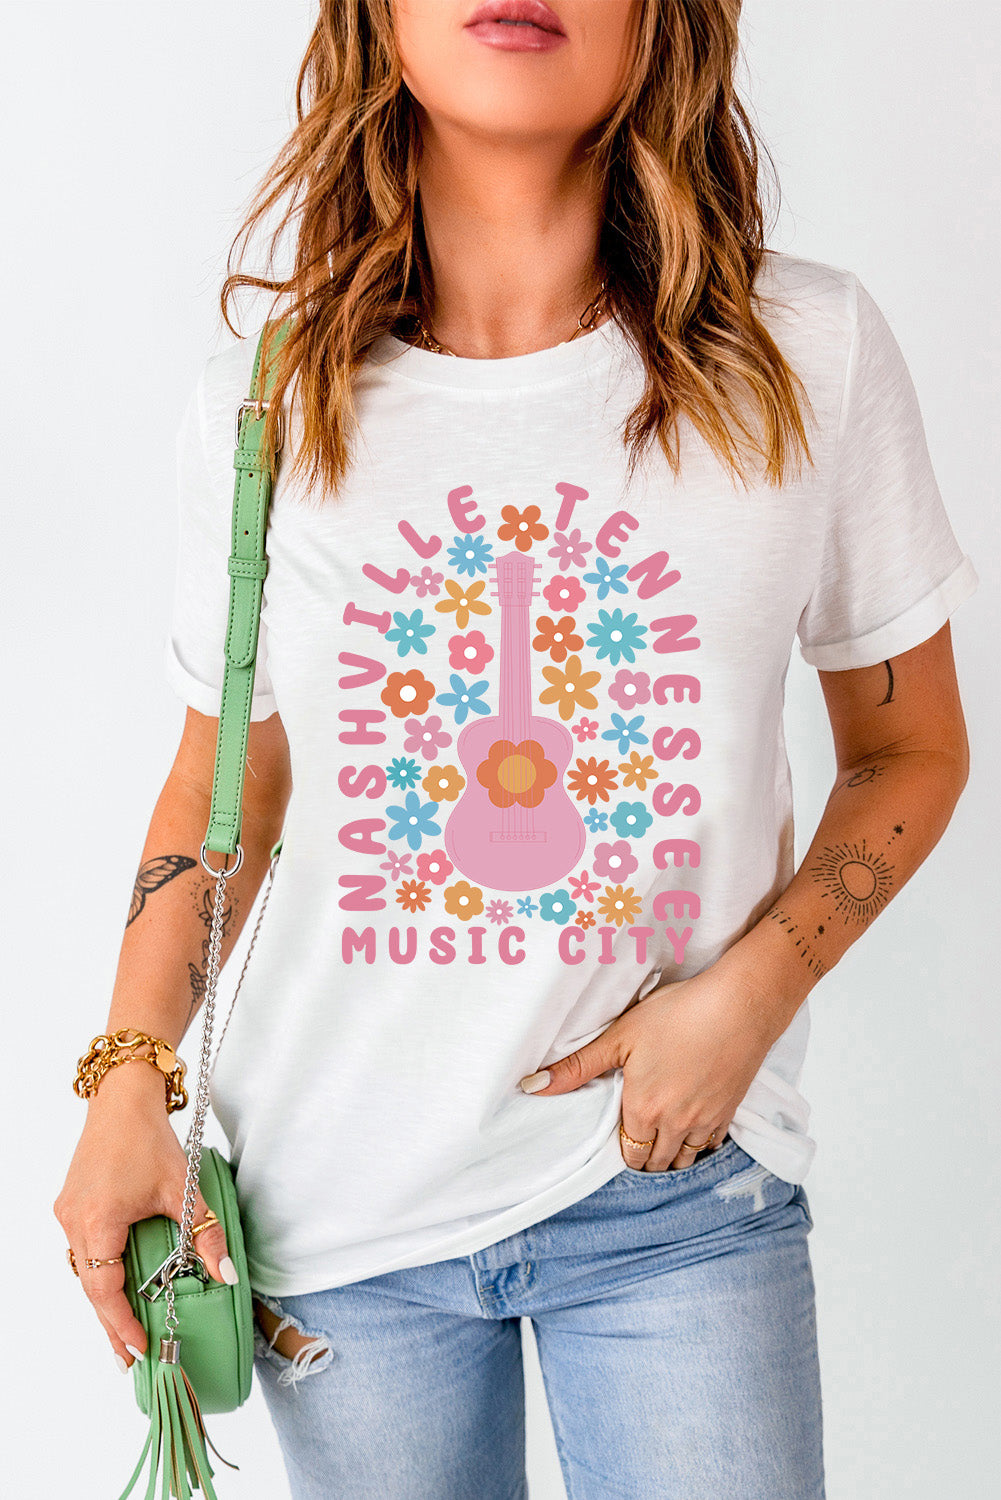 Nashville Music City Retro Flower Graphic Round Neck Short Sleeve T-Shirt